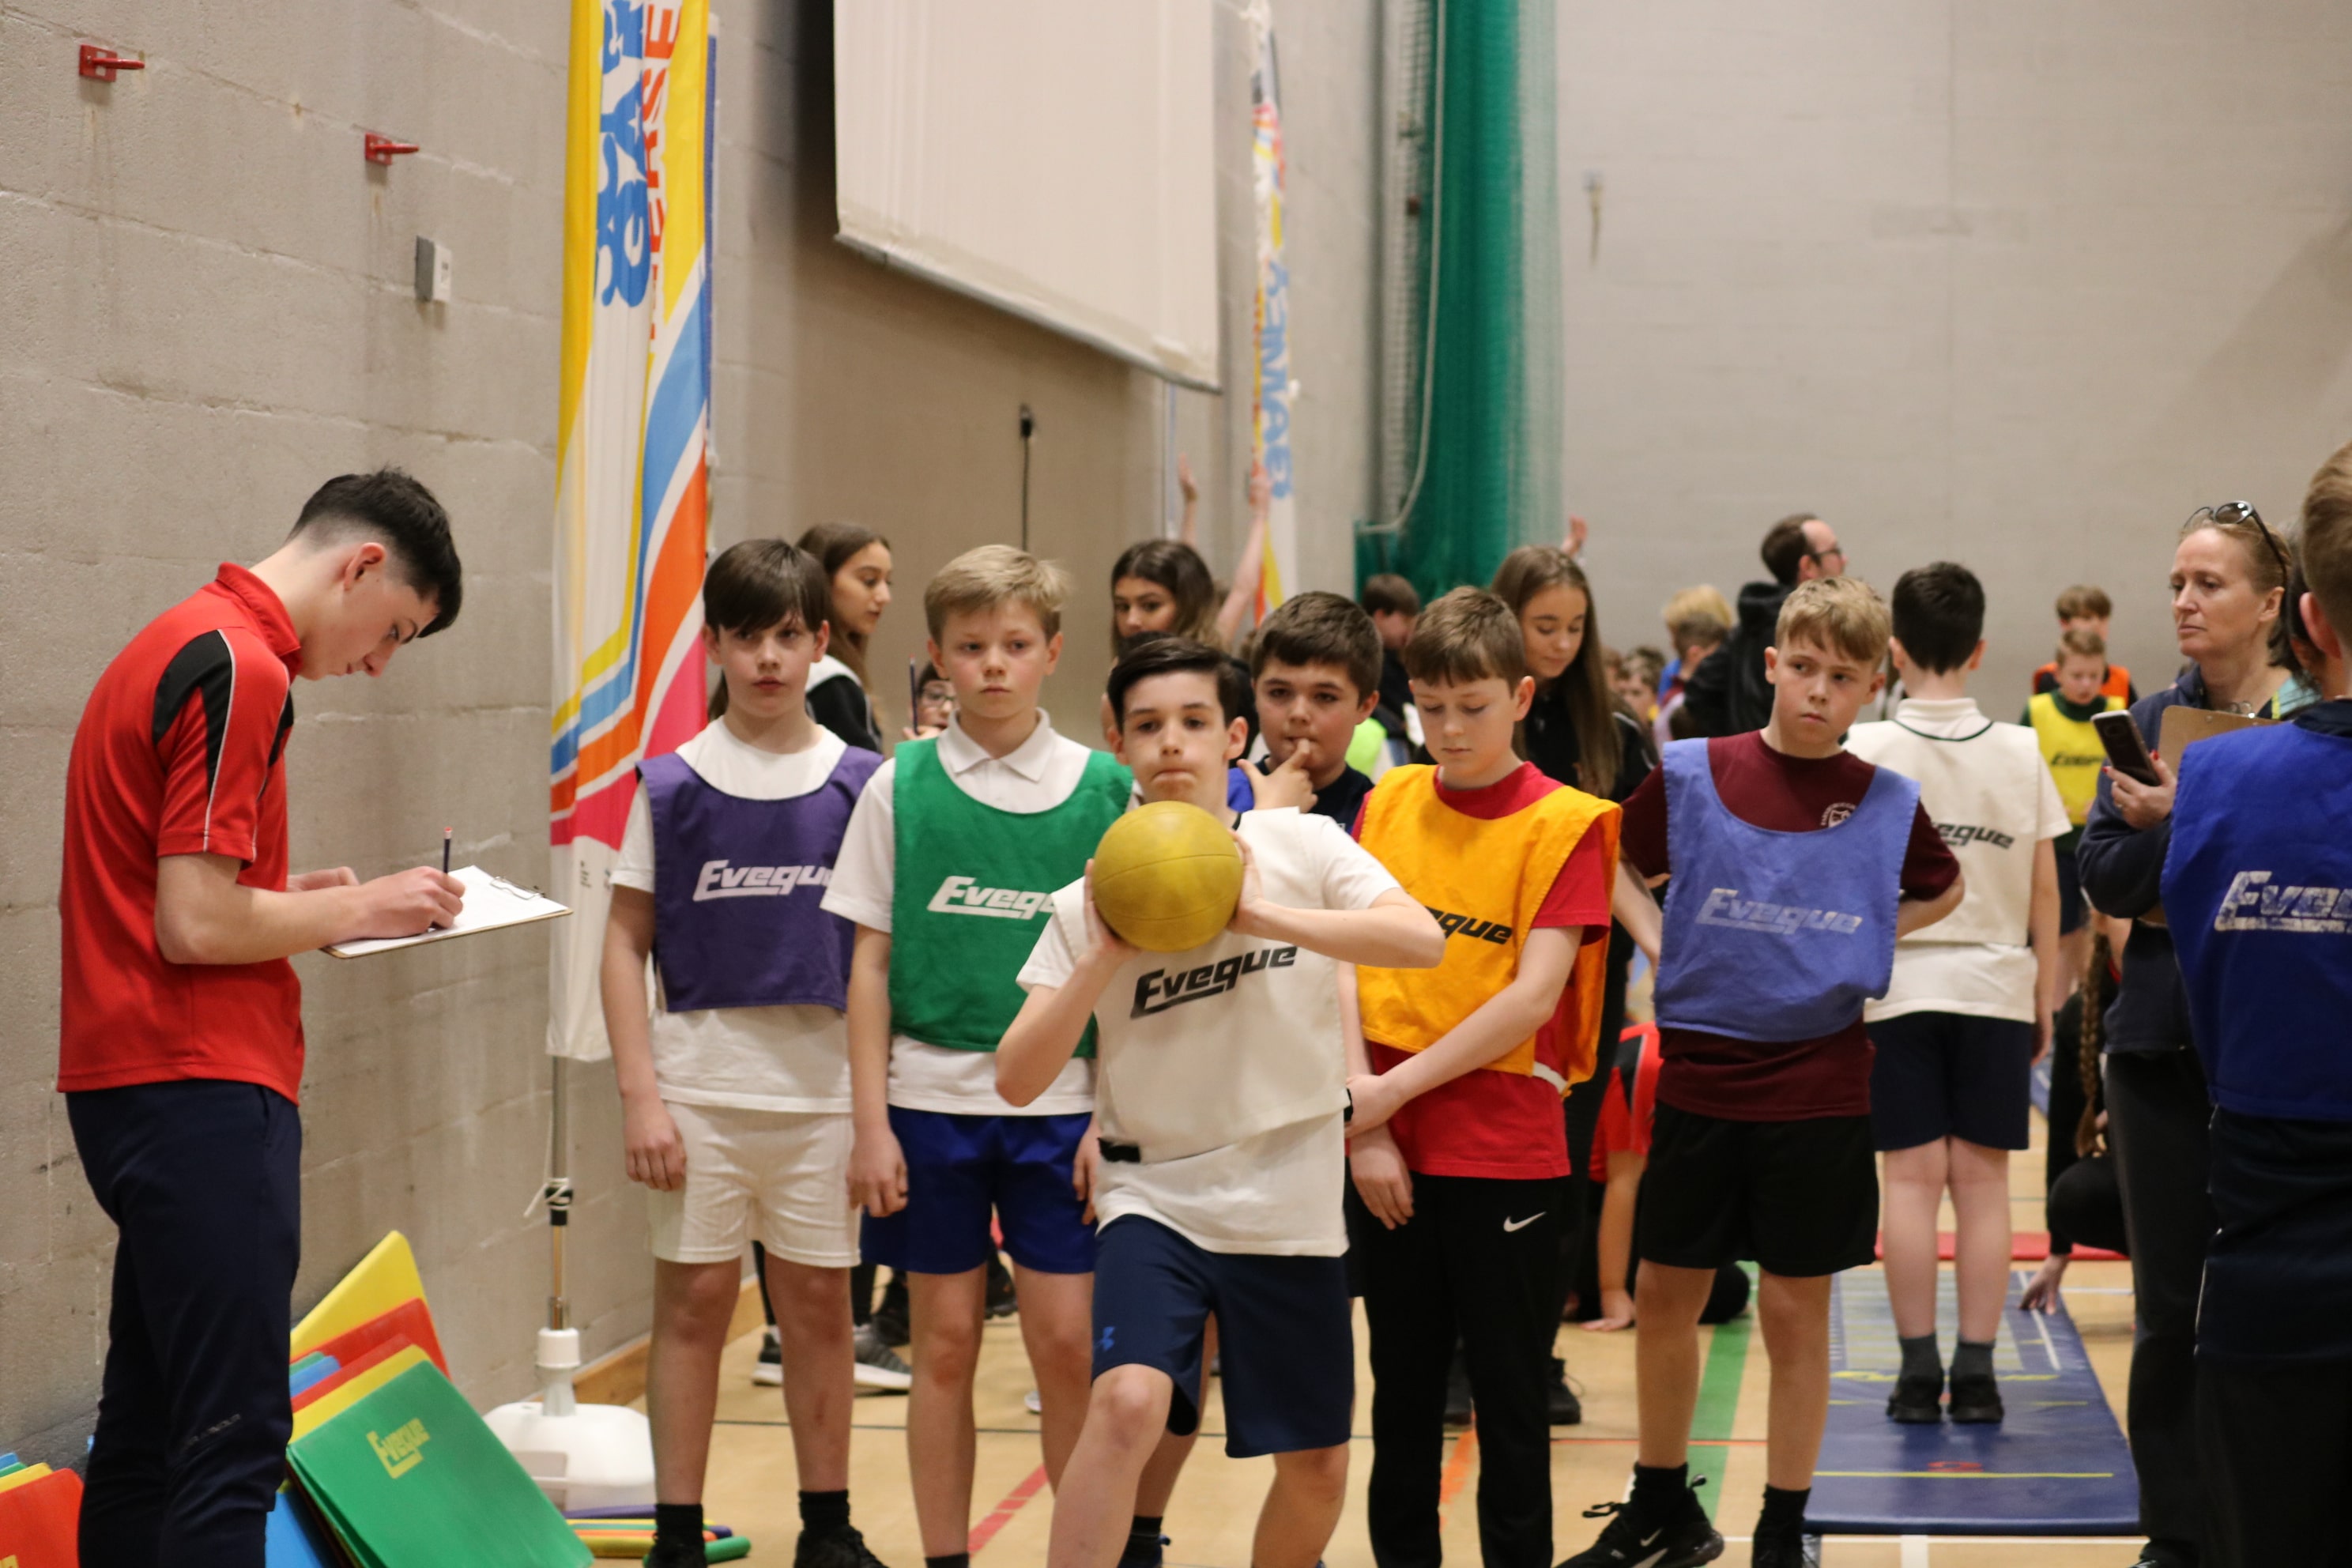 Sportshall athletics - pupil throwing ball